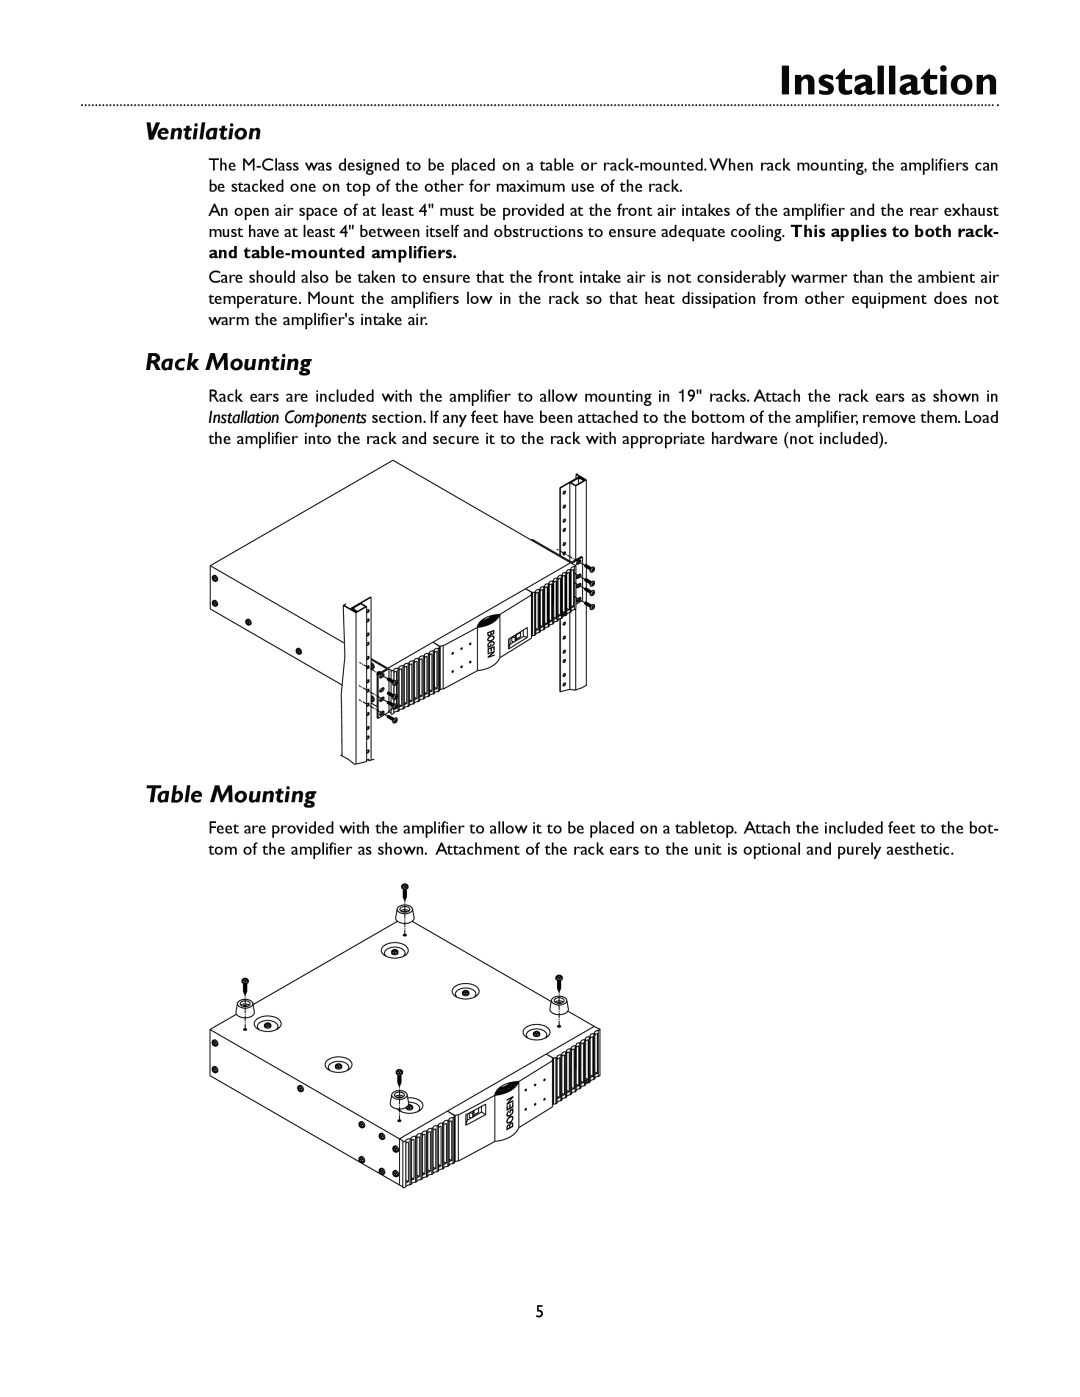 Bogen M300 manual Ventilation, Rack Mounting, Table Mounting, Installation 